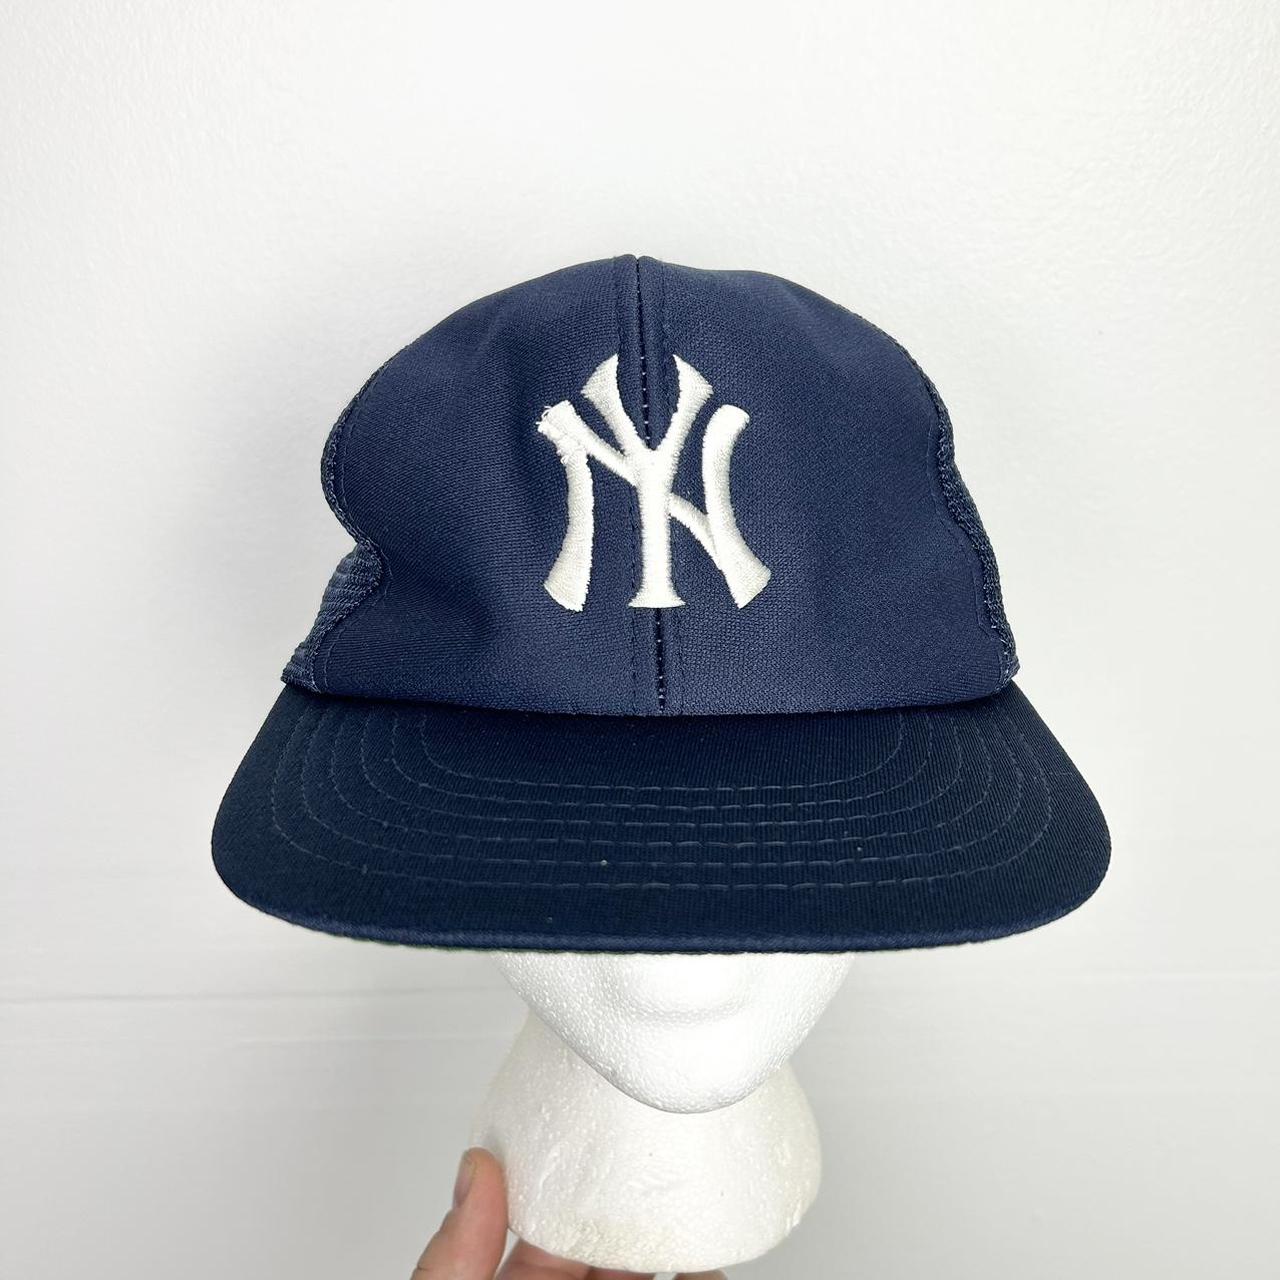 Vintage 1980’s New York Yankees Hat in excellent